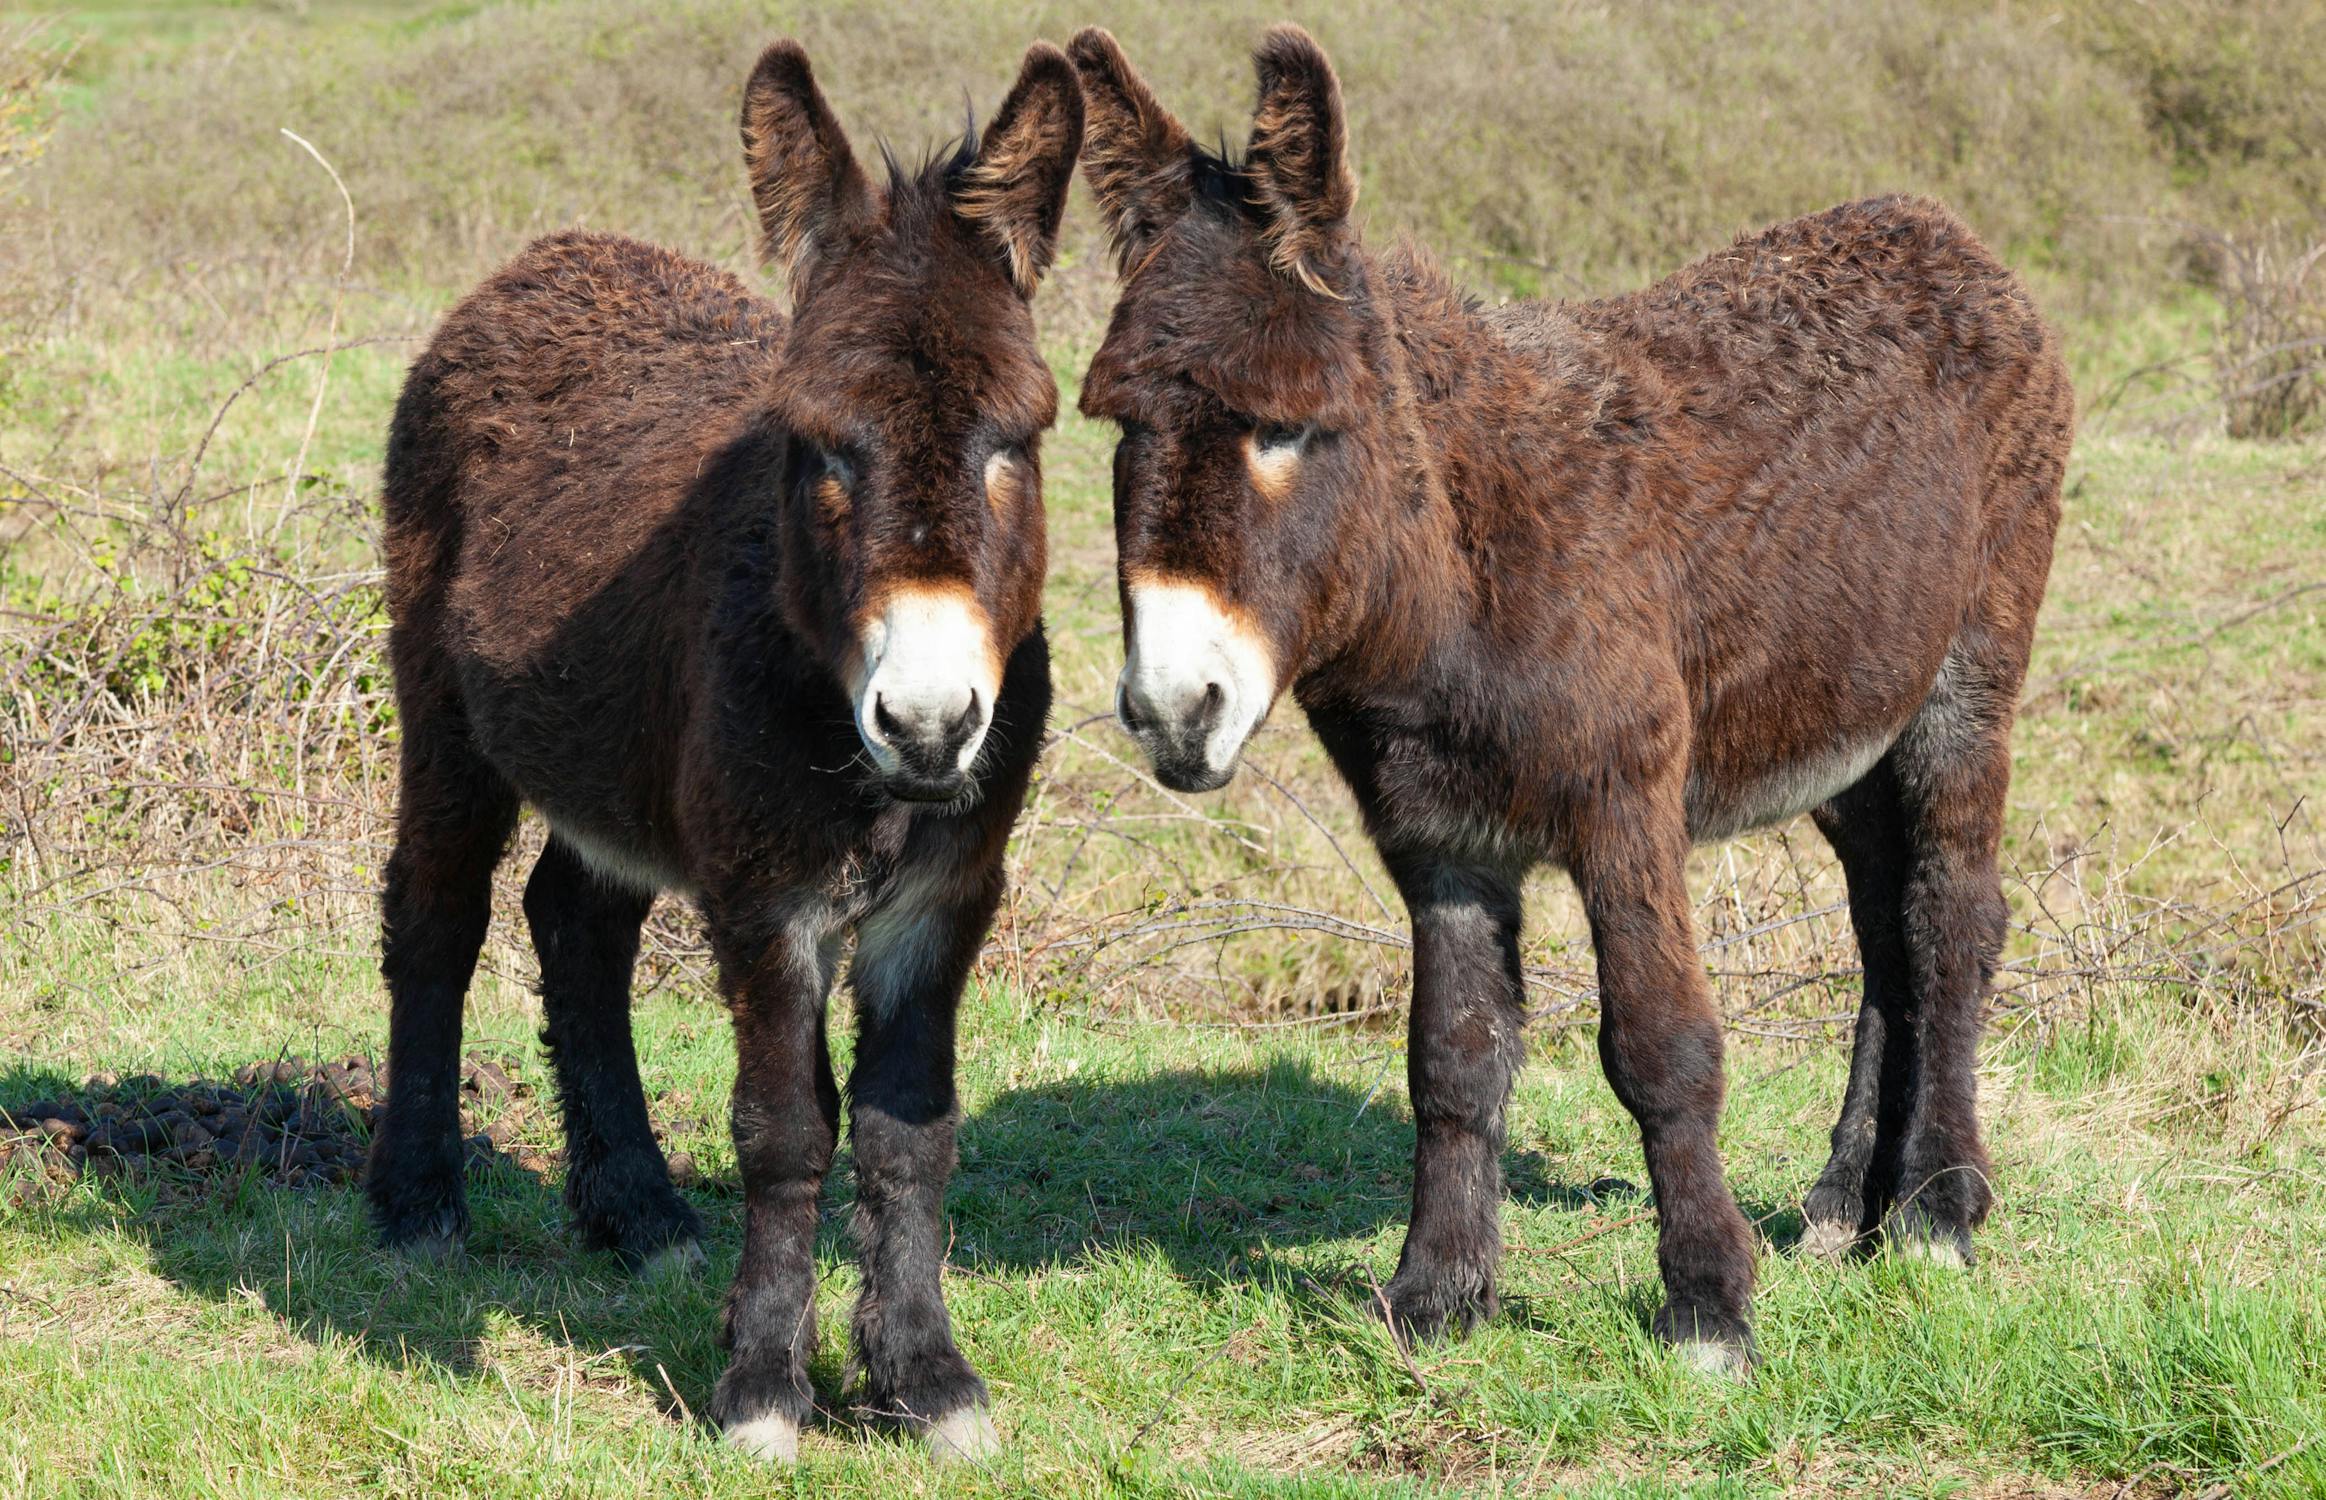 Donkeys on Grass · Free Stock Photo